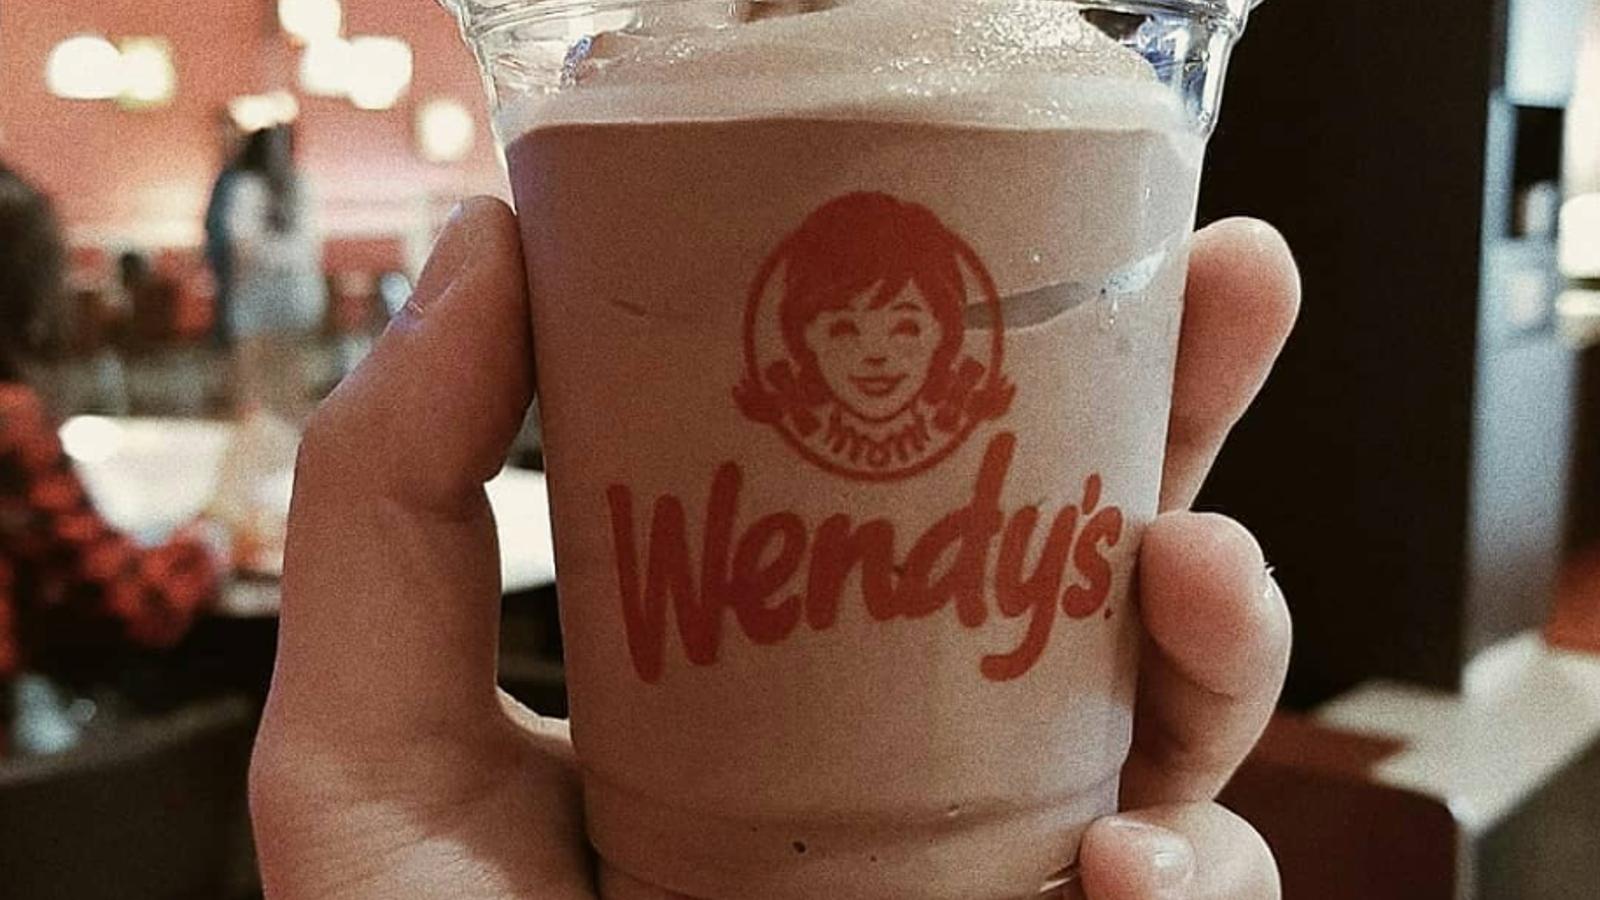 Wendy's chocolate frosty